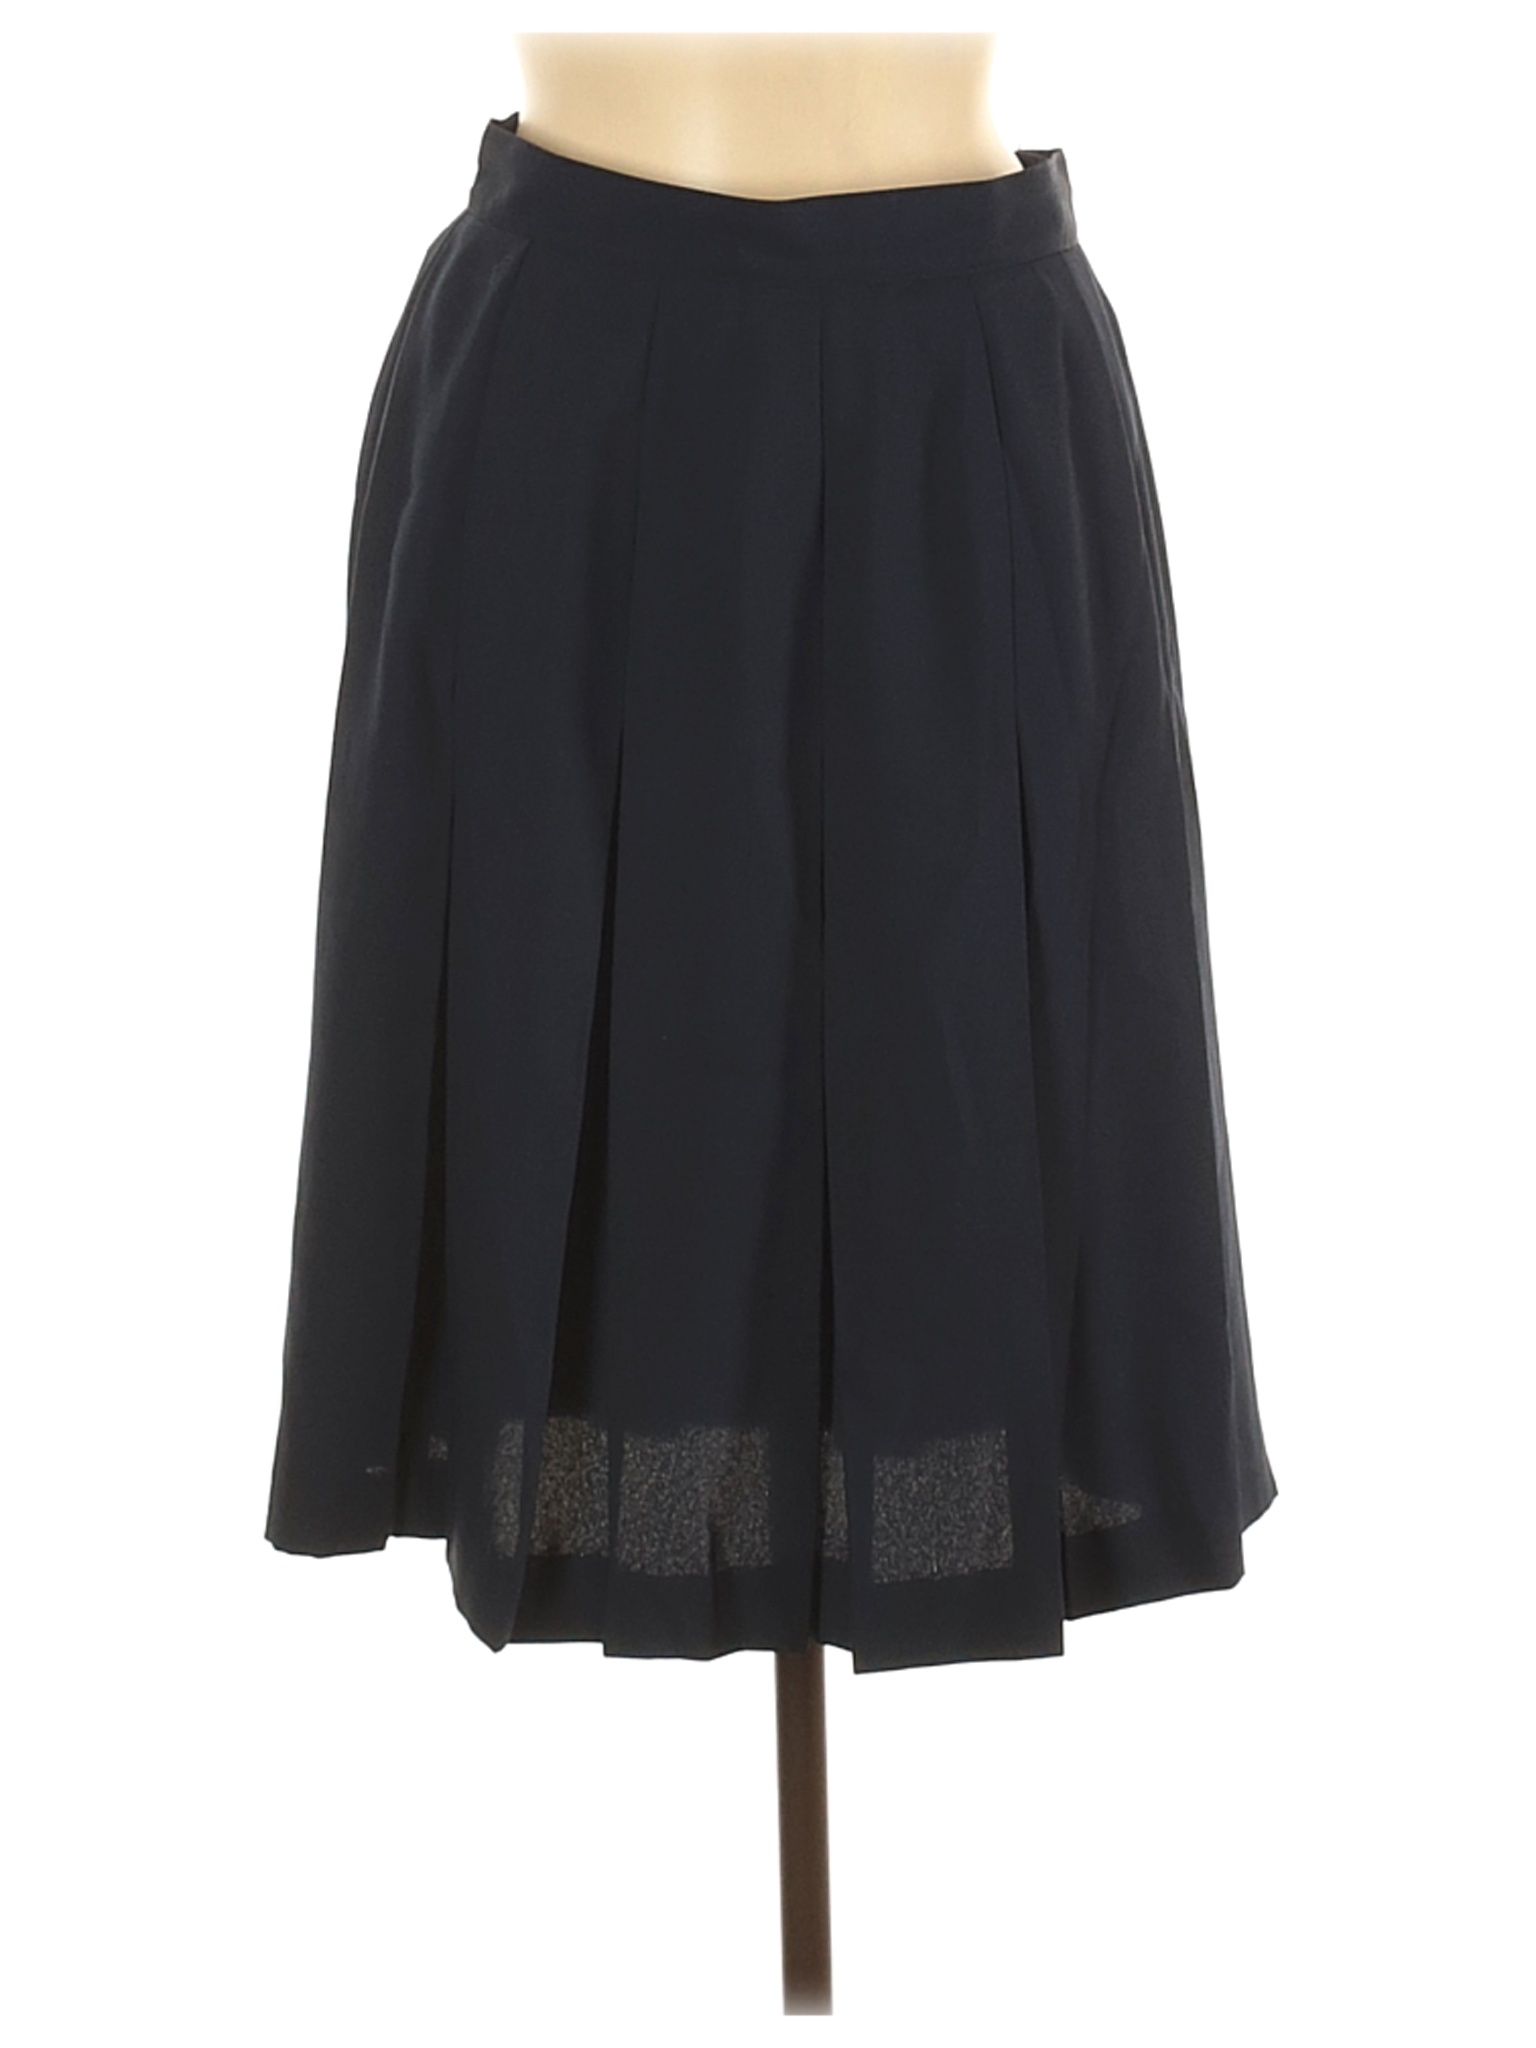 Liz Claiborne Collection Women Black Casual Skirt 10 | eBay